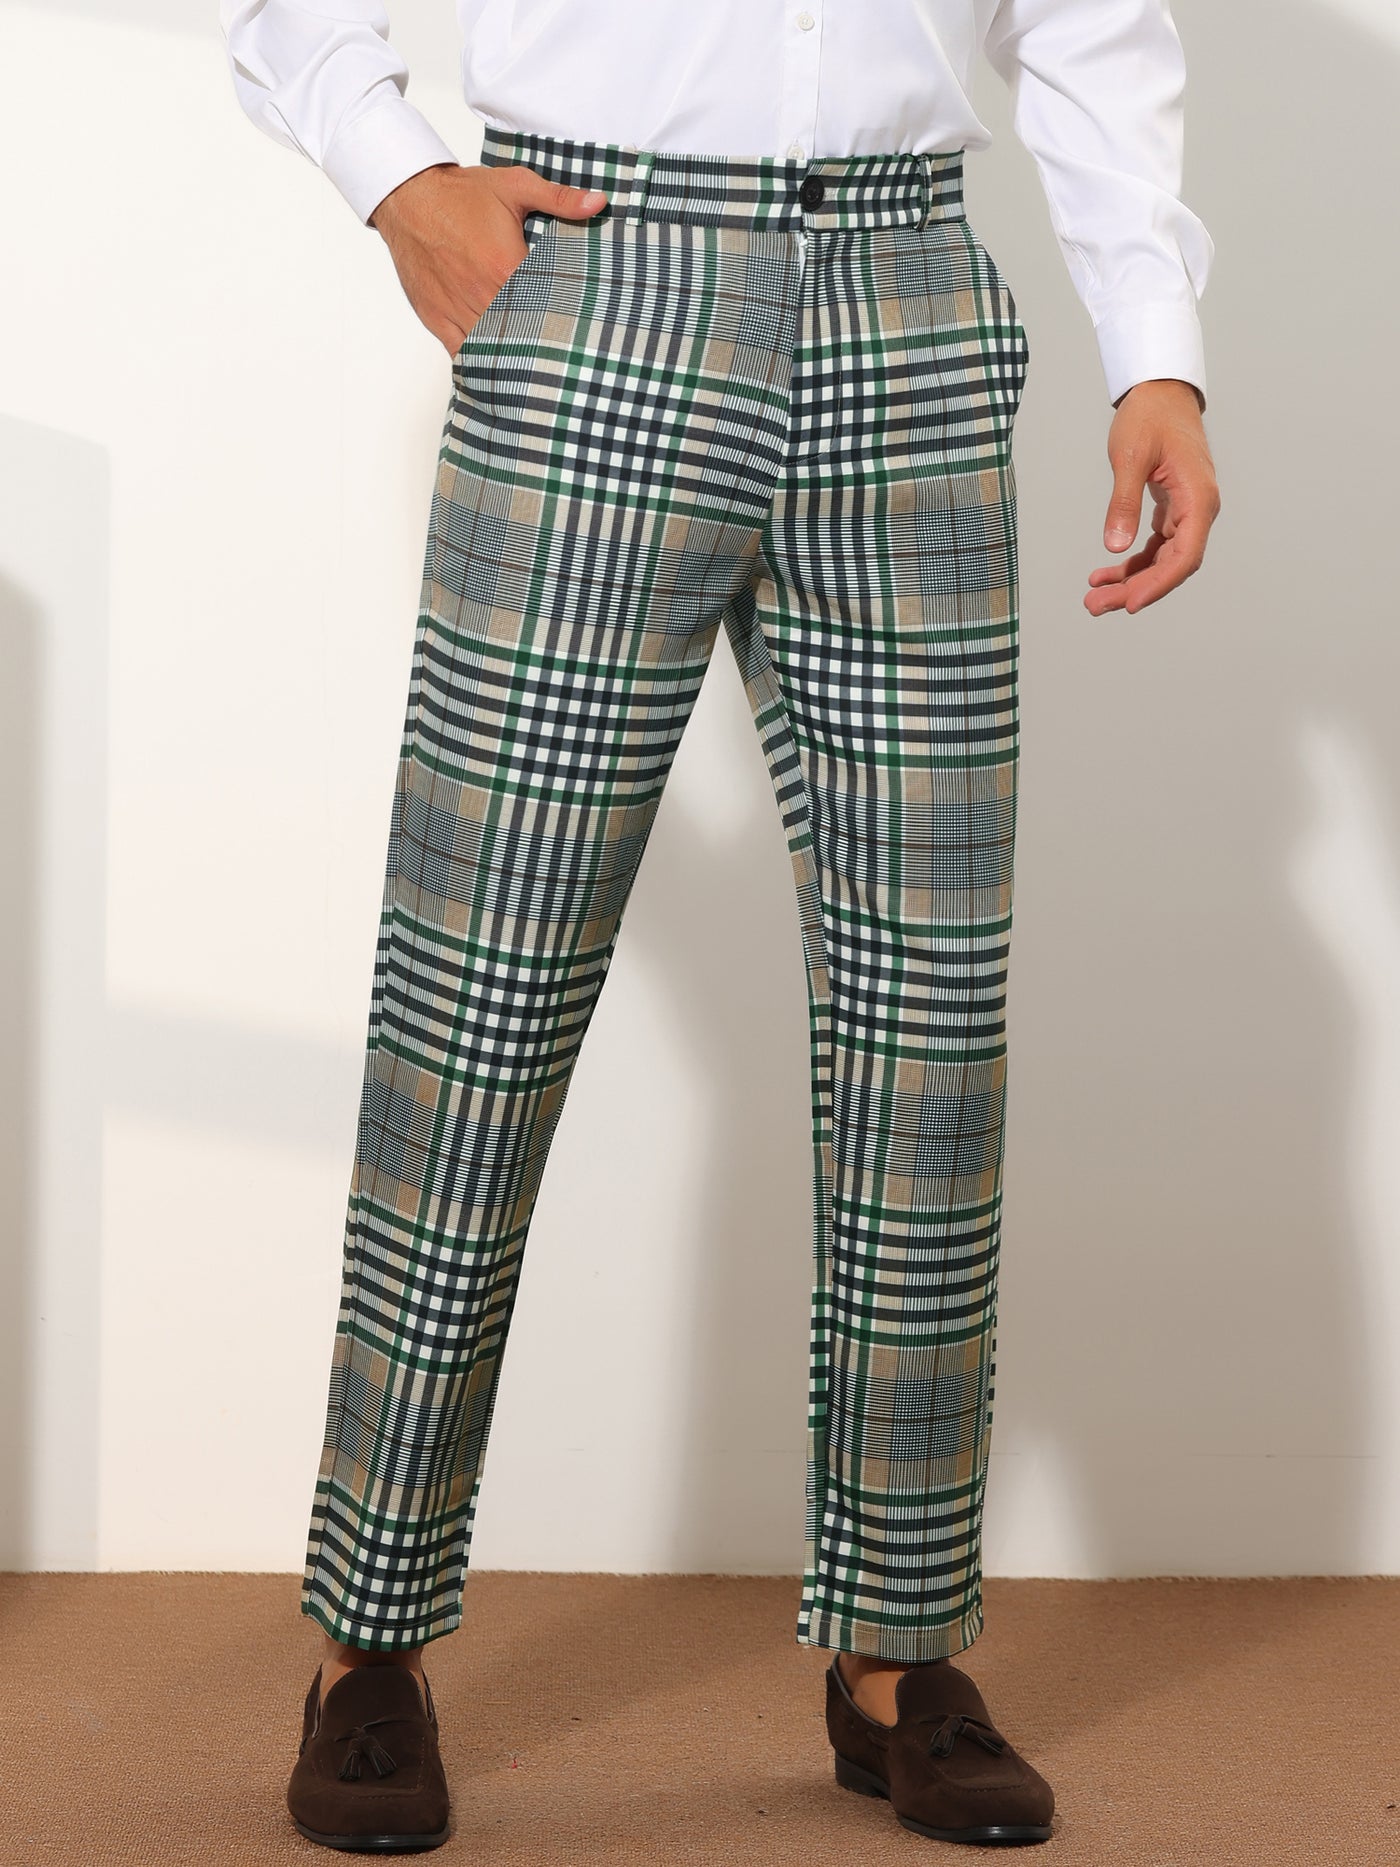 Bublédon Men's Business Plaid Dress Pants Straight Fit Flat Front Checked Pattern Trousers